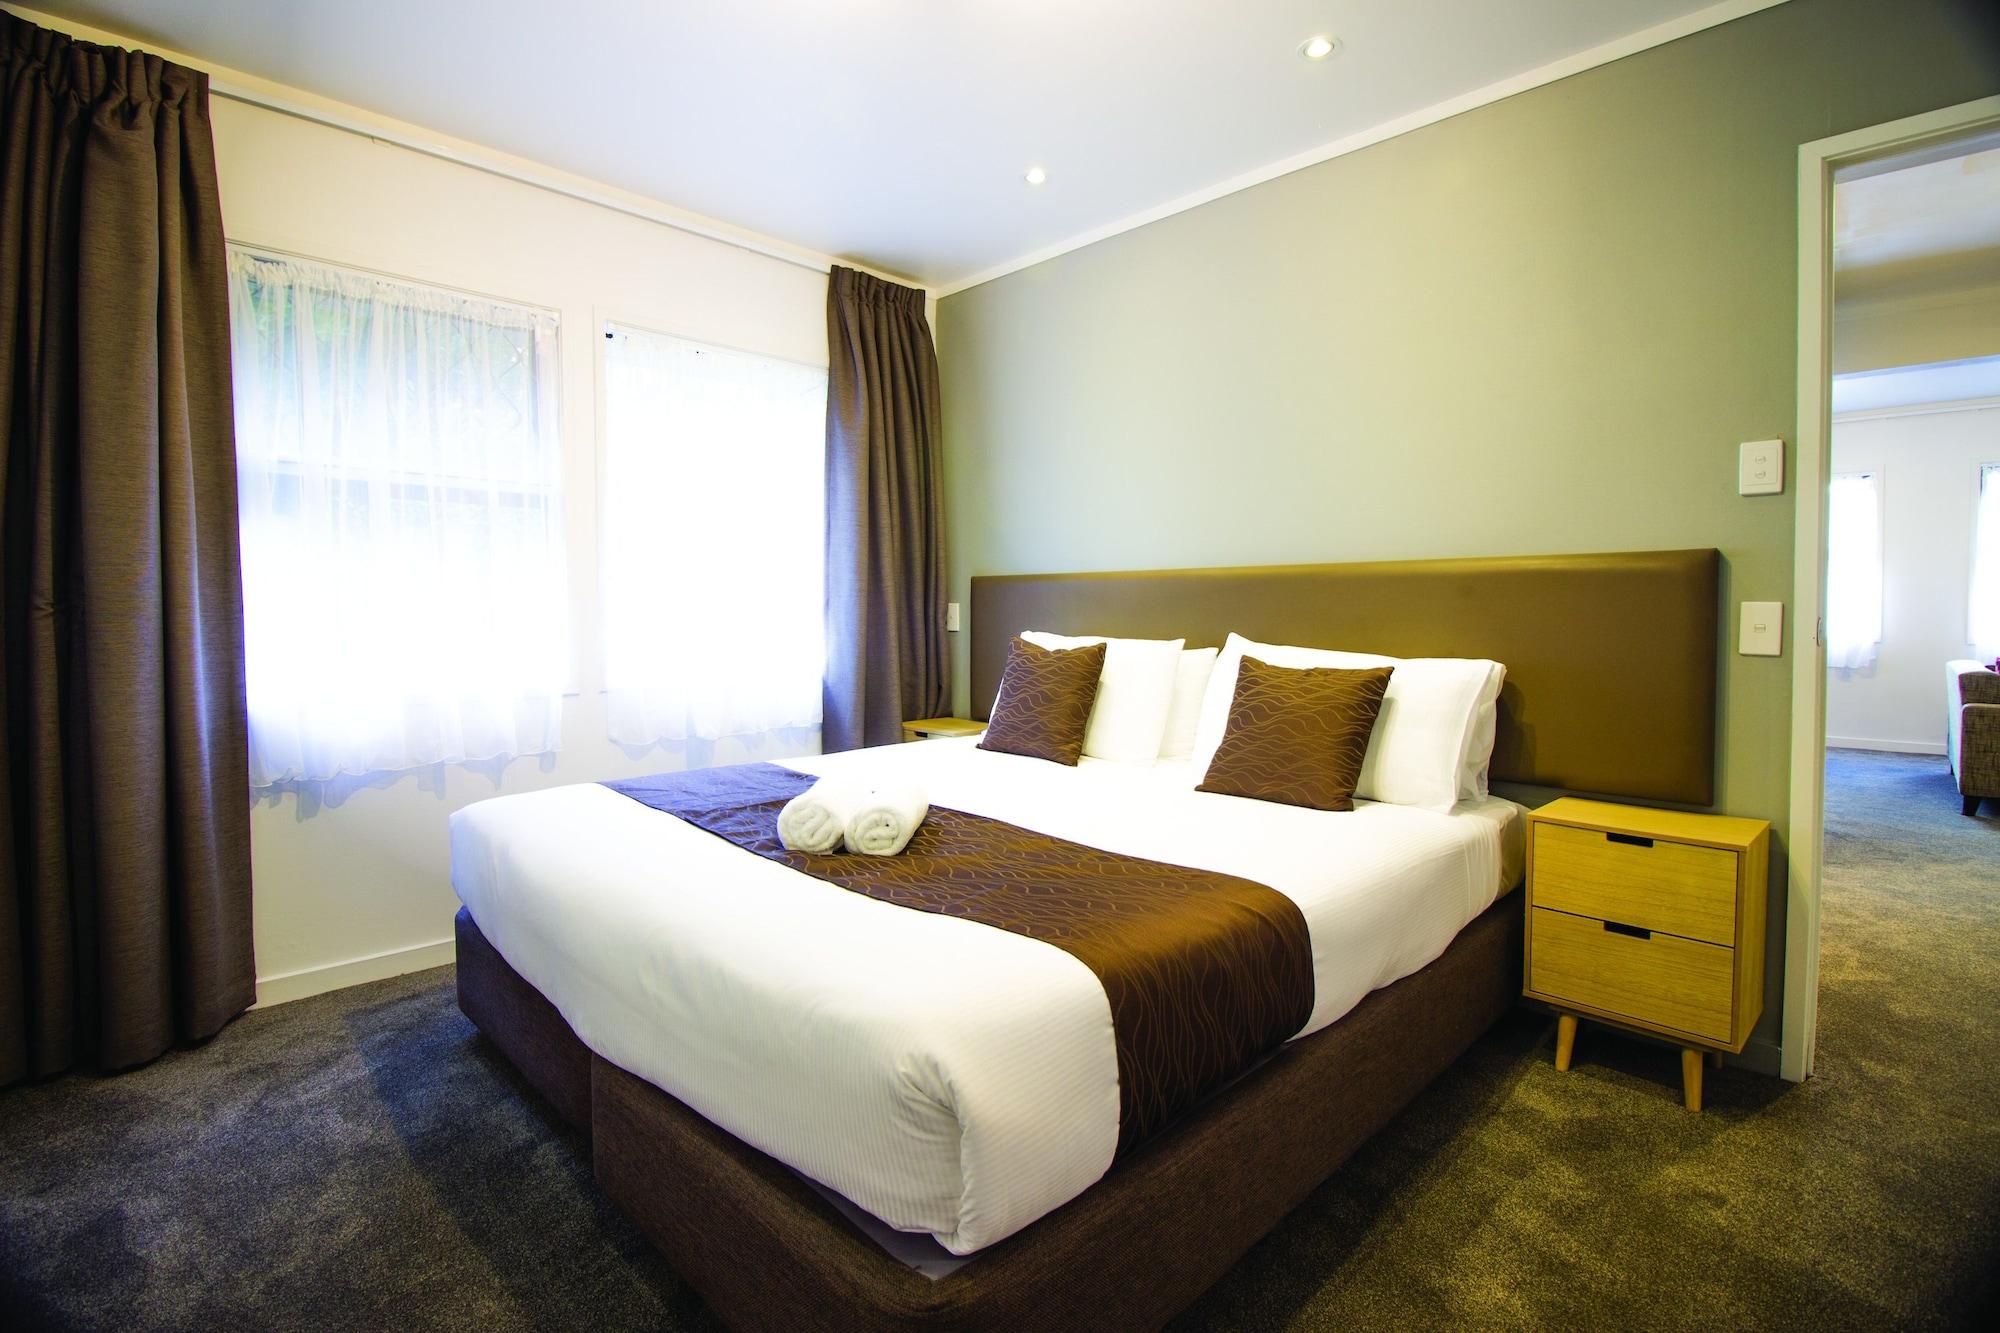 Mount Richmond Hotel Auckland Exteriér fotografie